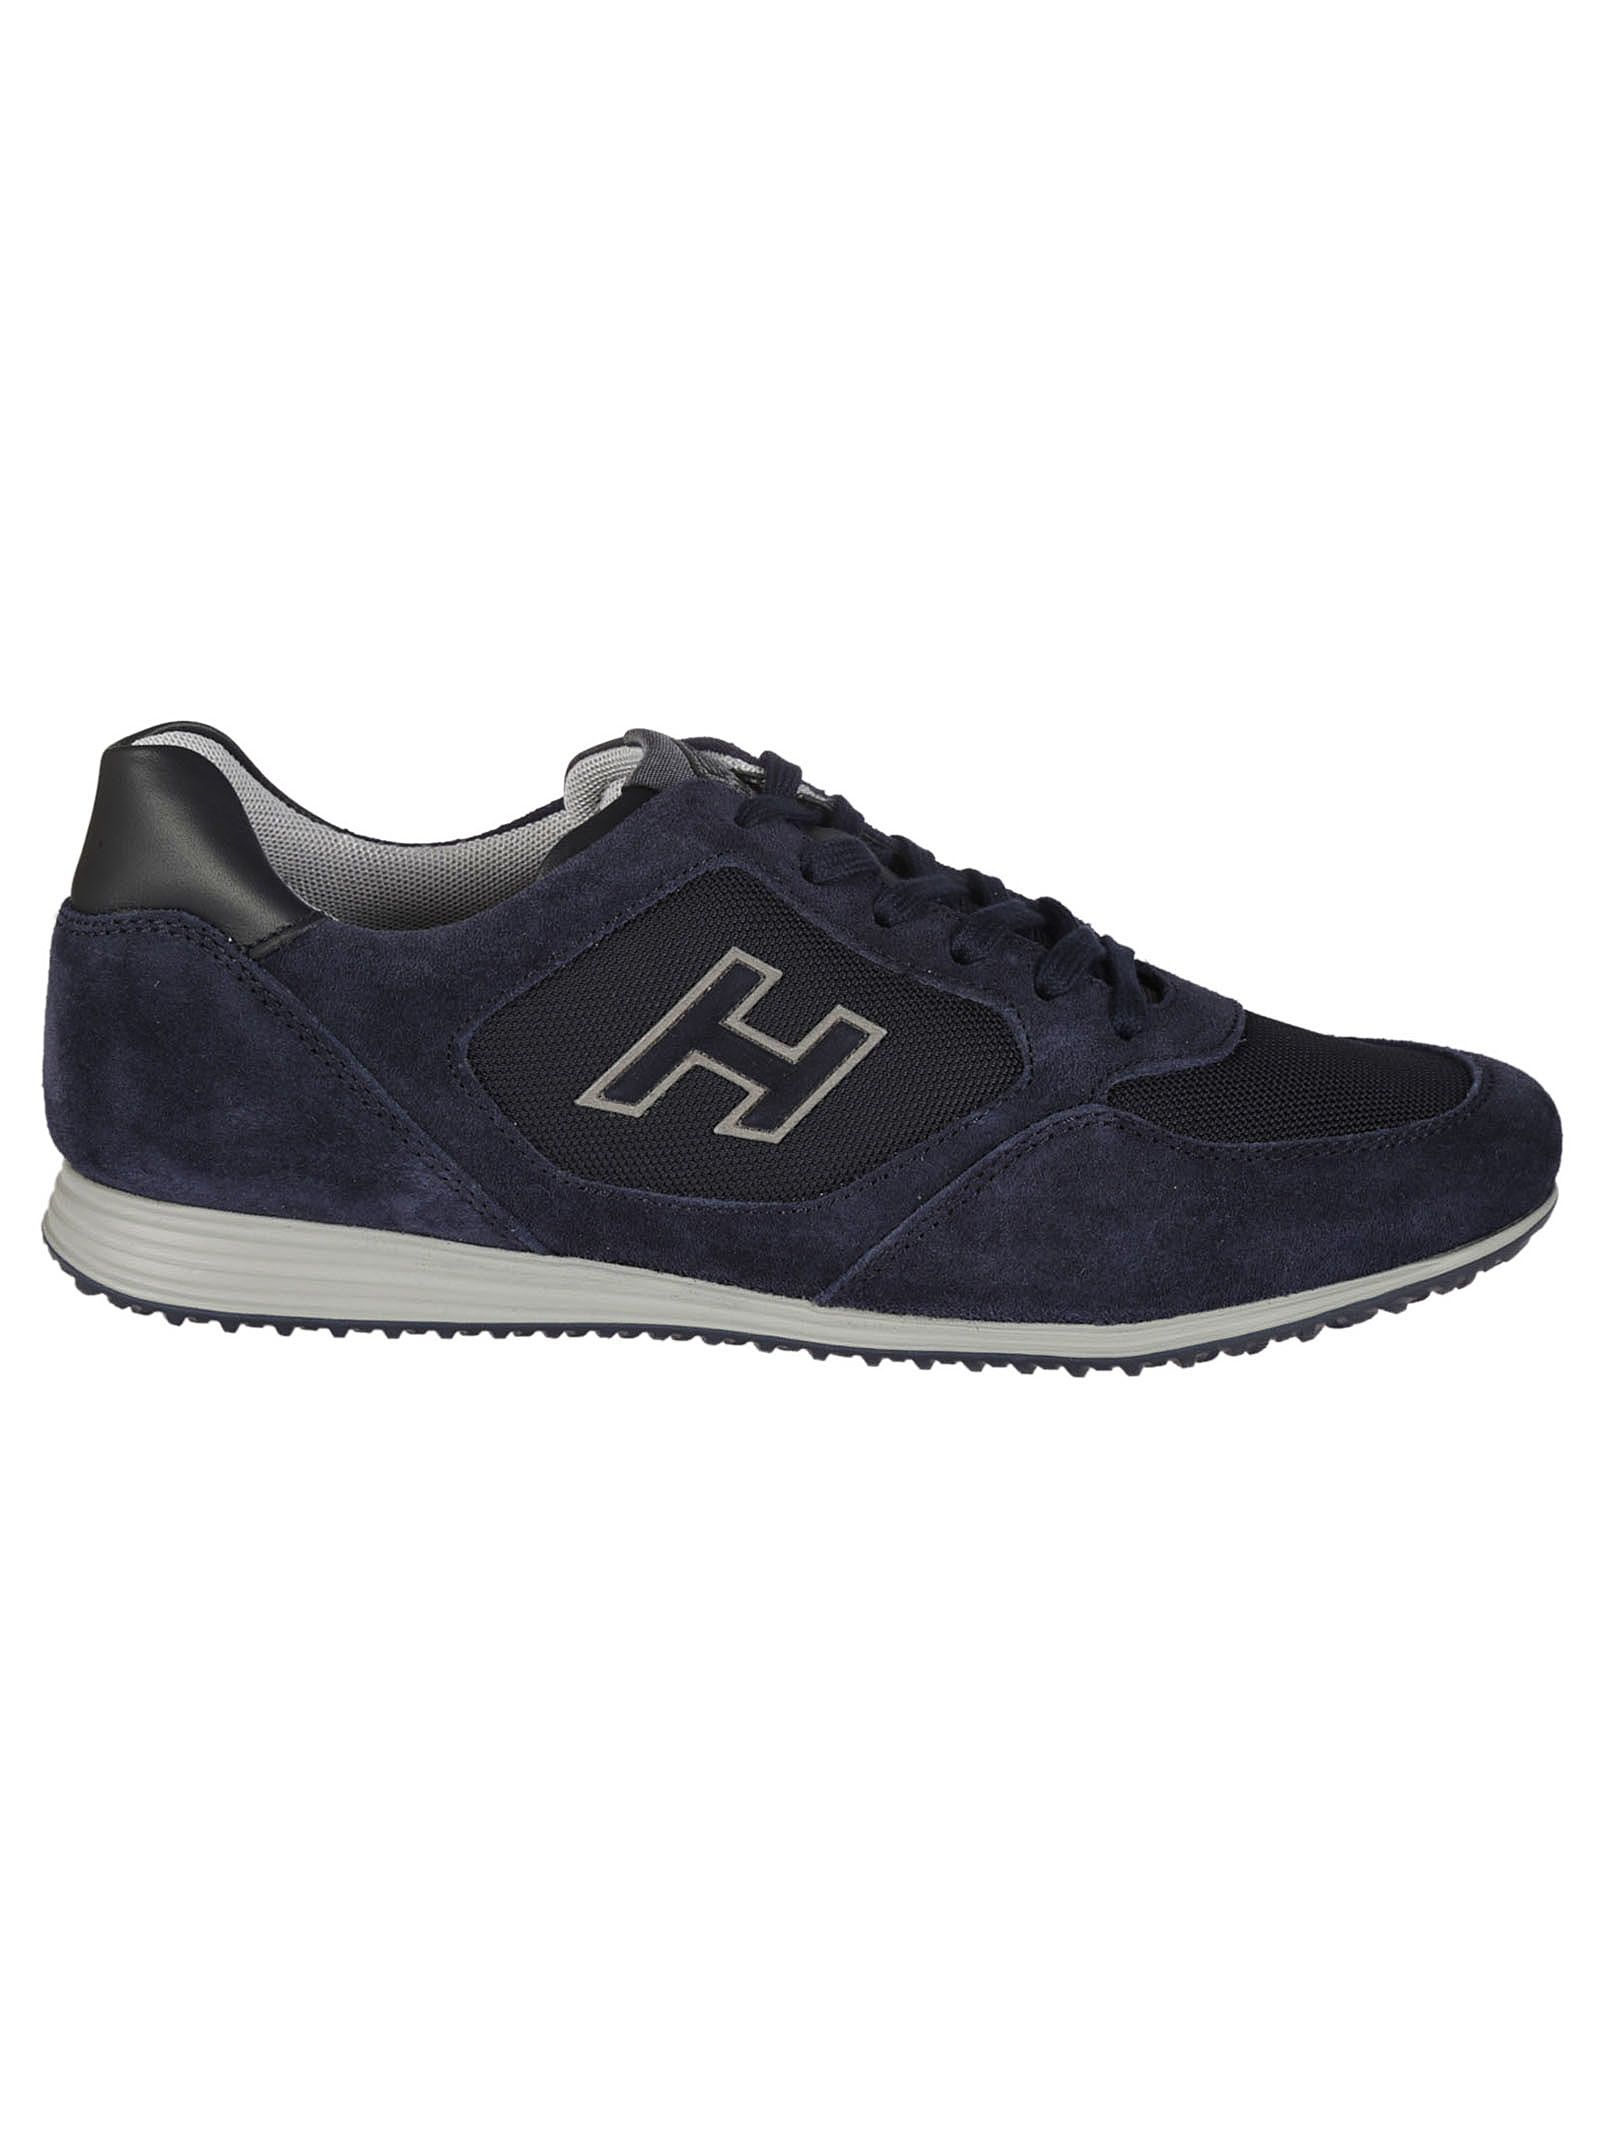 Hogan - Hogan Olympia X H205 Sneakers - Blue/Black, Men's Sneakers ...